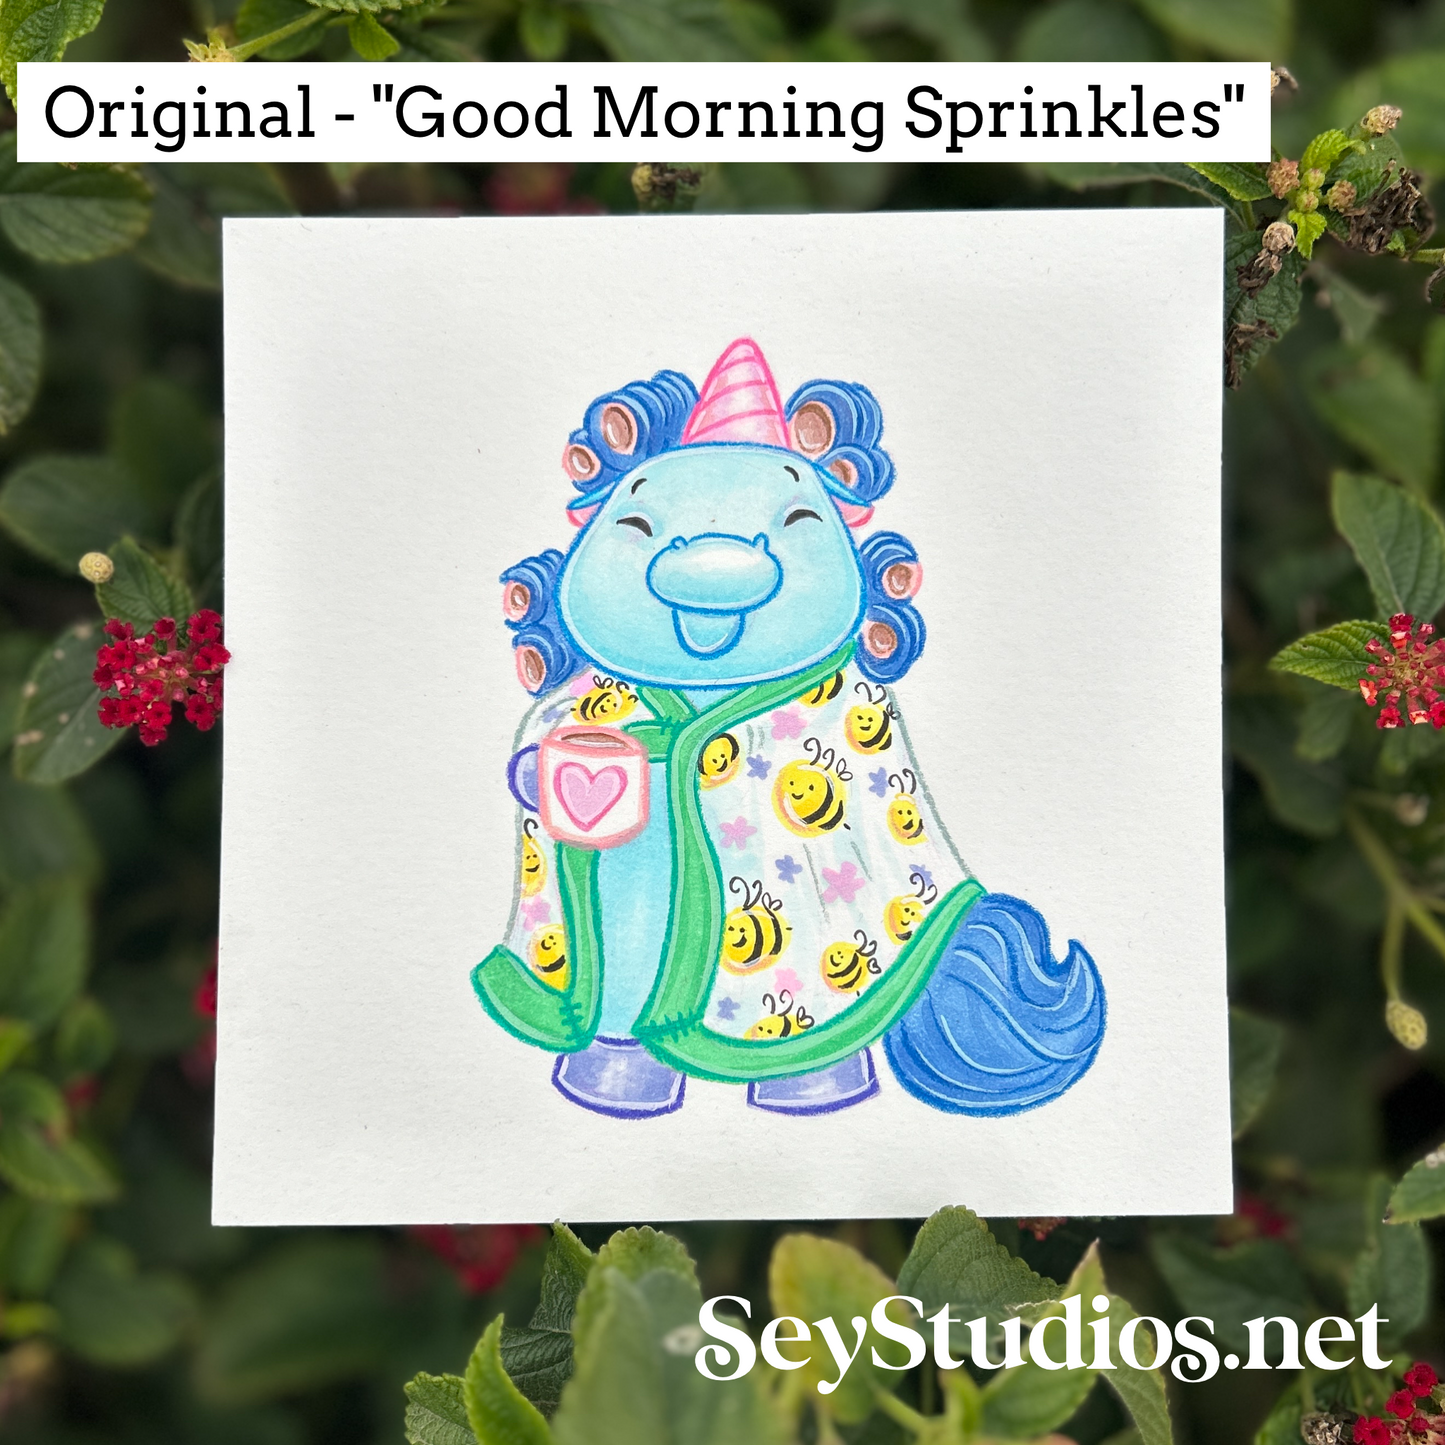 Original - “Good Morning Sprinkles”